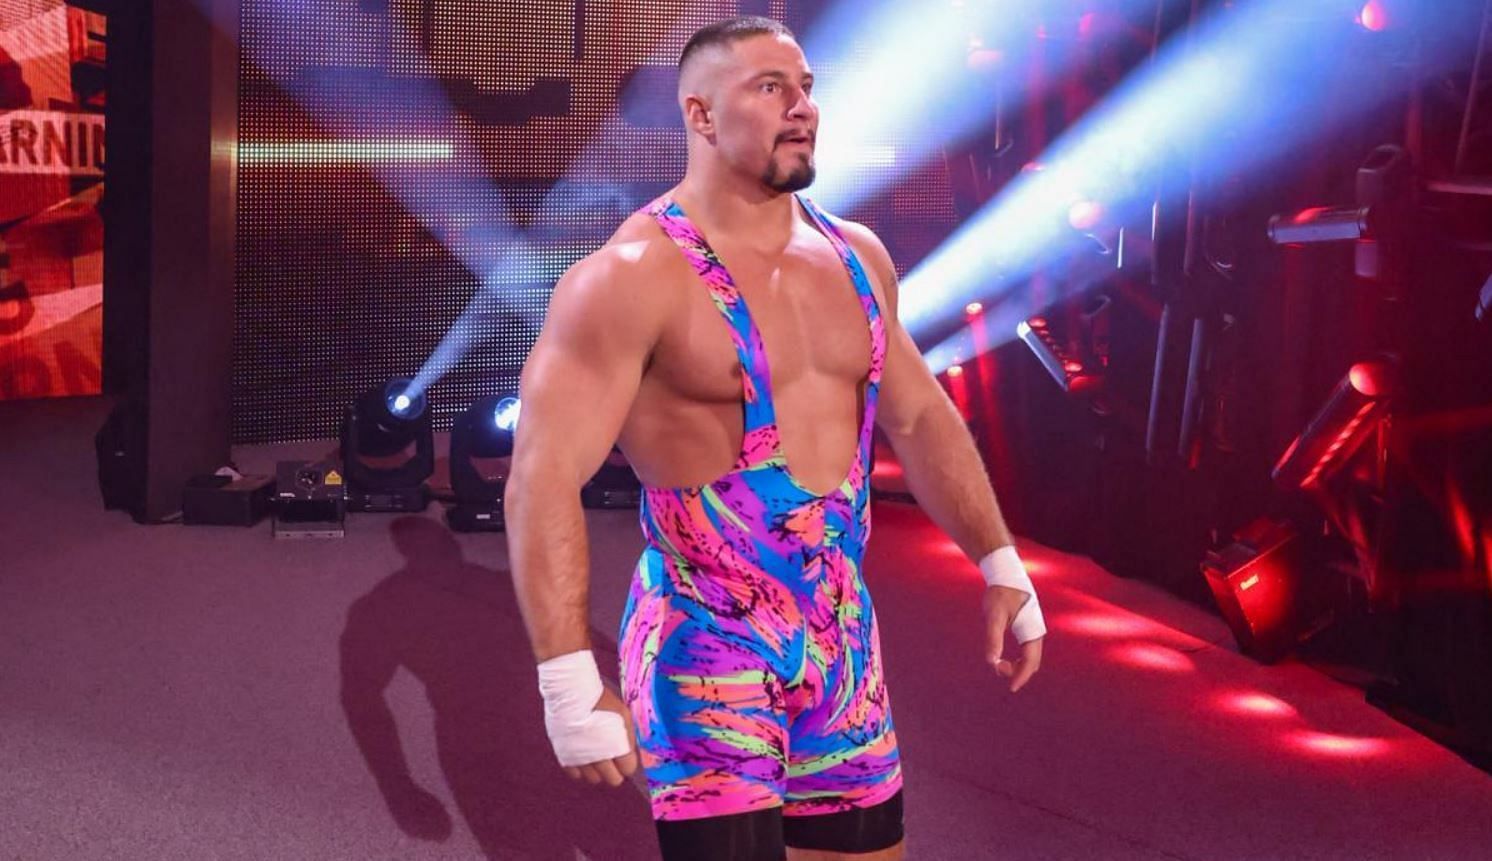 Could NXT Champion Bron Breakker defend his title at Survivor Series?